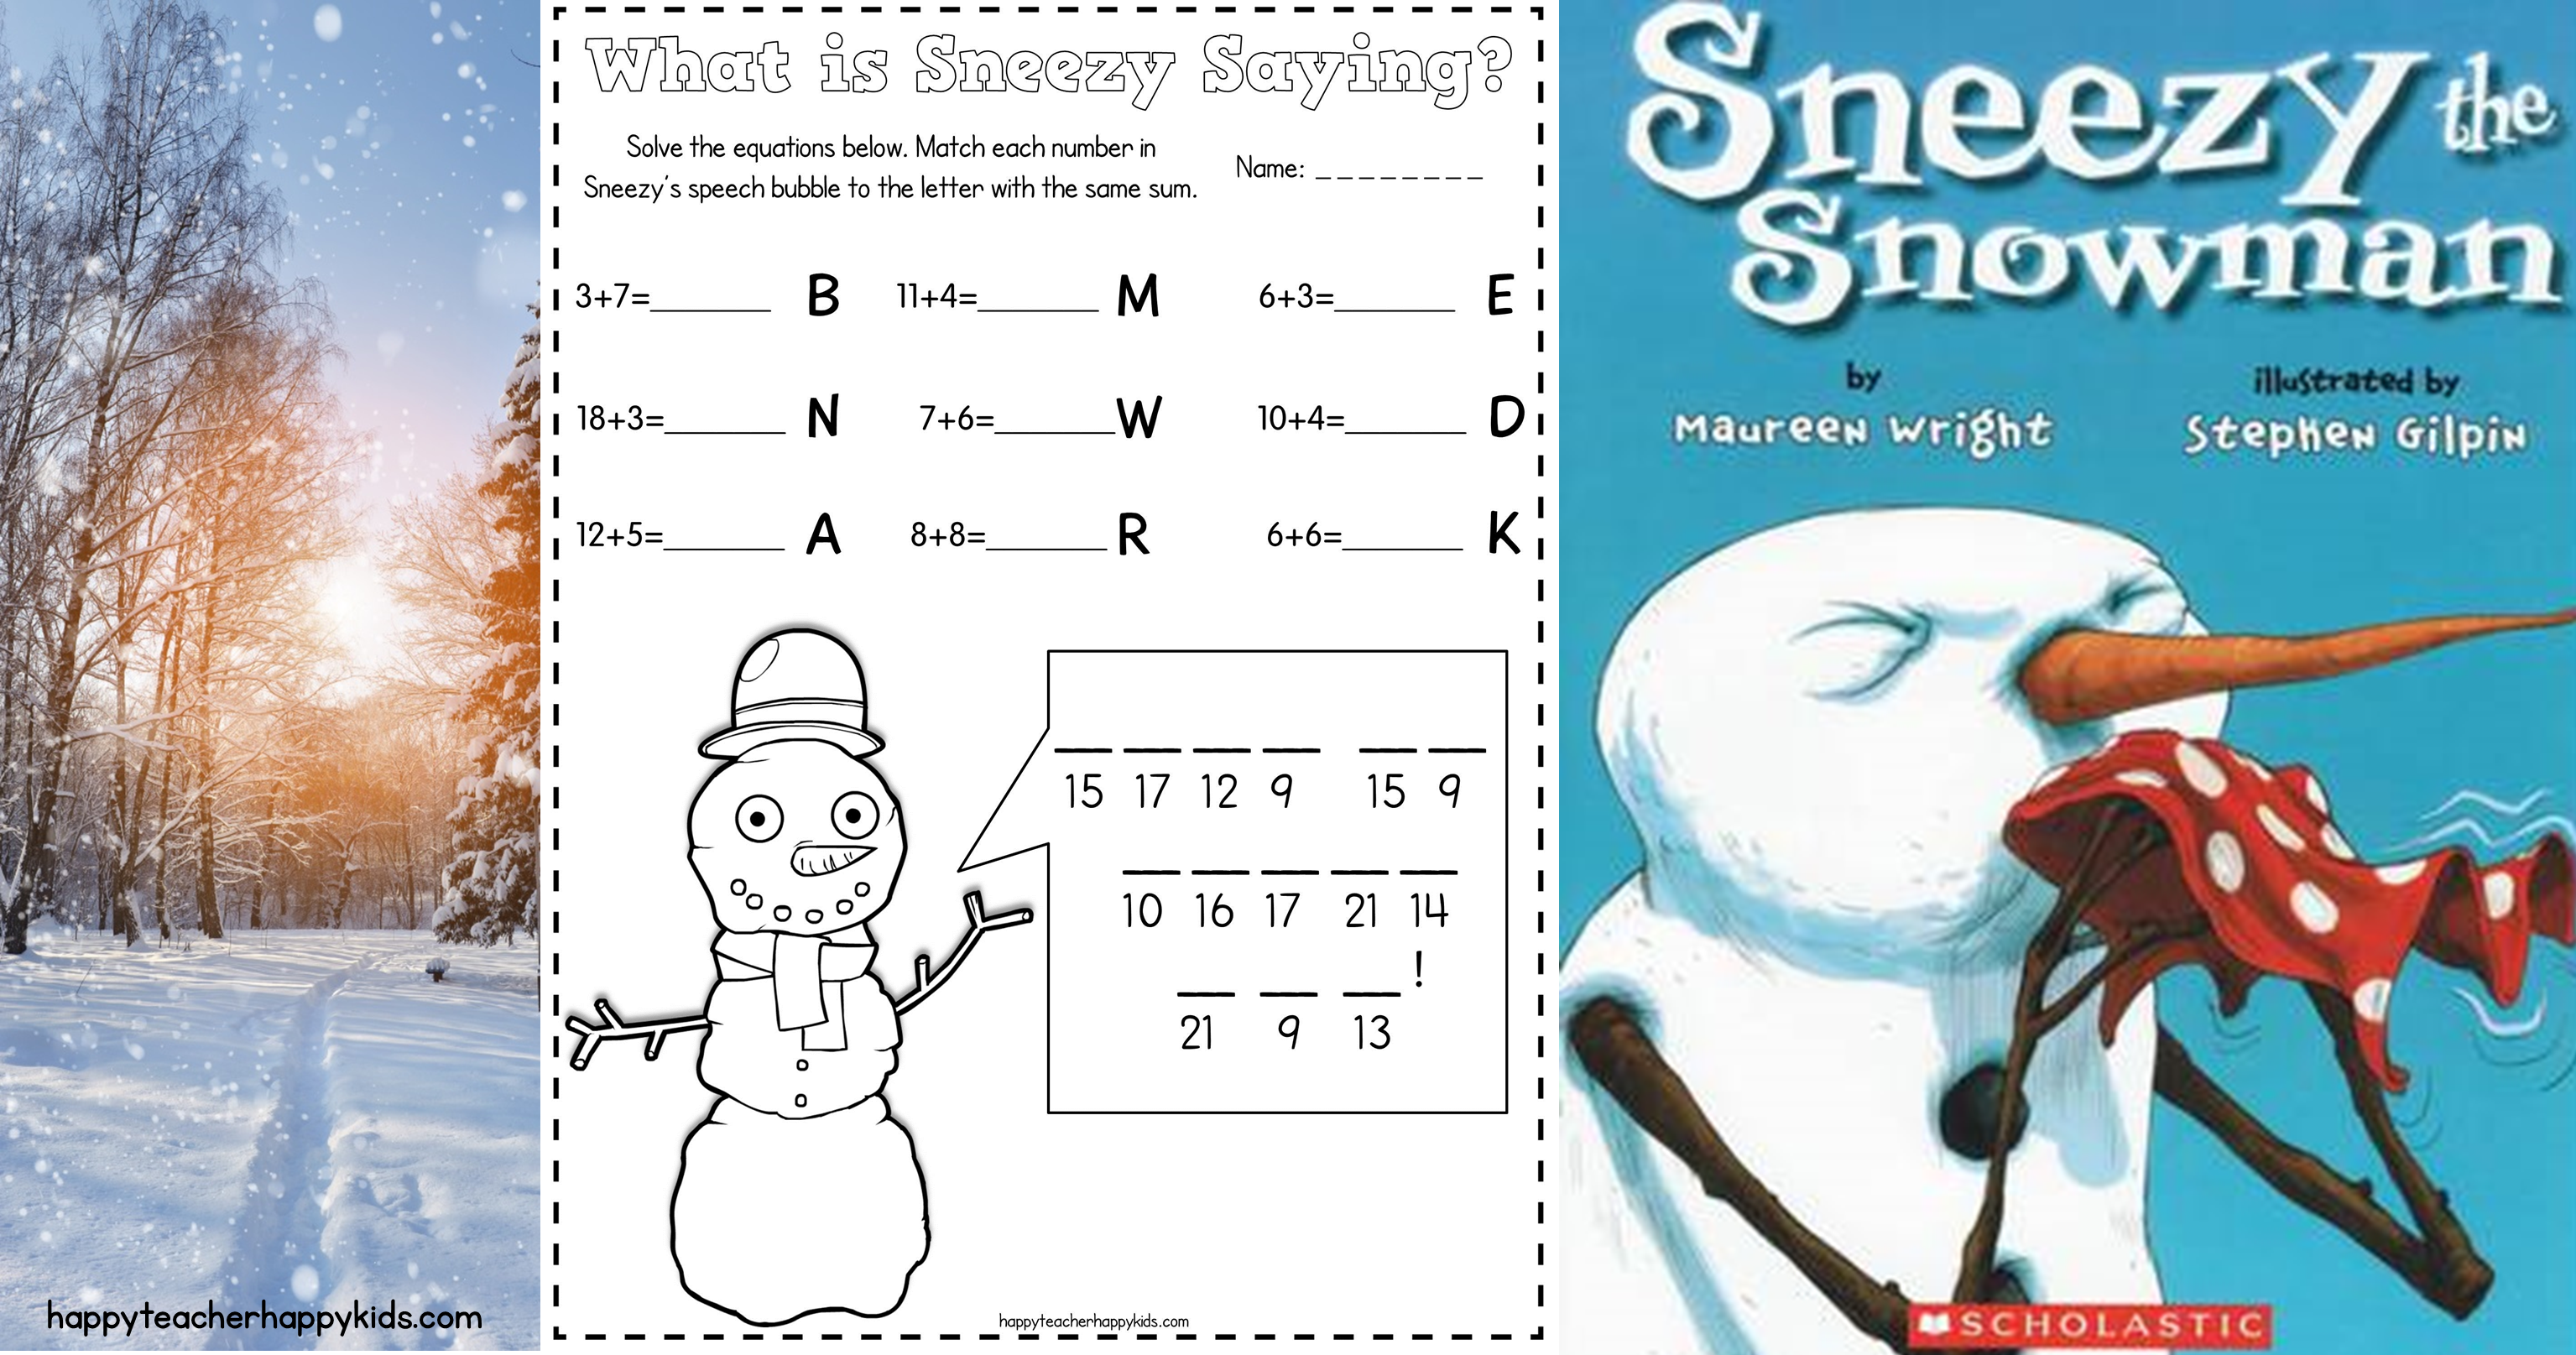 Sneezy the Snowman Ideas - Happy Teacher, Happy Kids